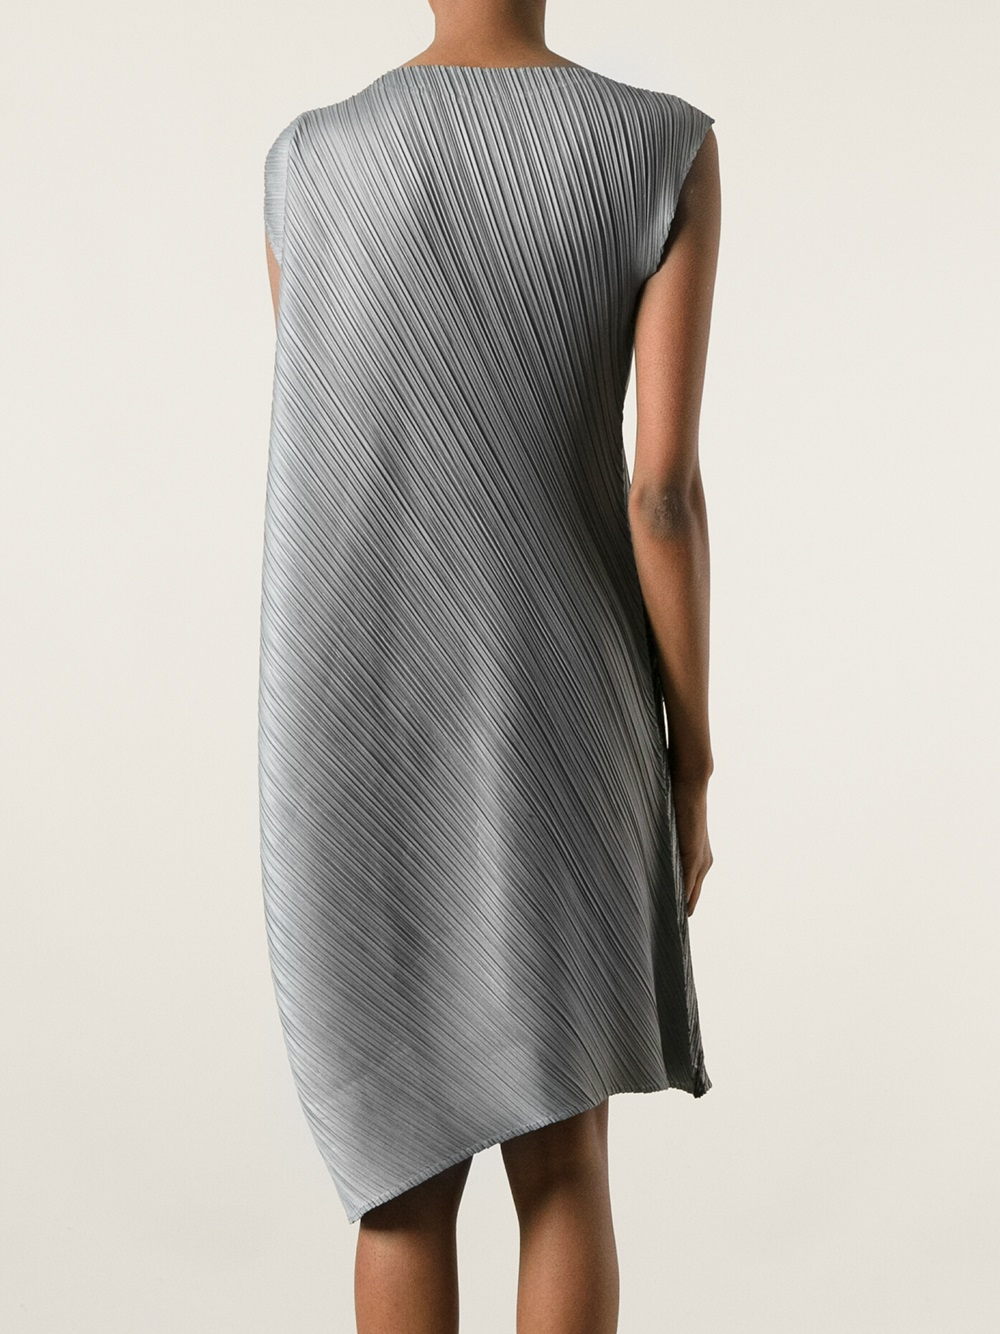 Lyst - Pleats Please Issey Miyake Asymmetric Pleated Dress in Metallic